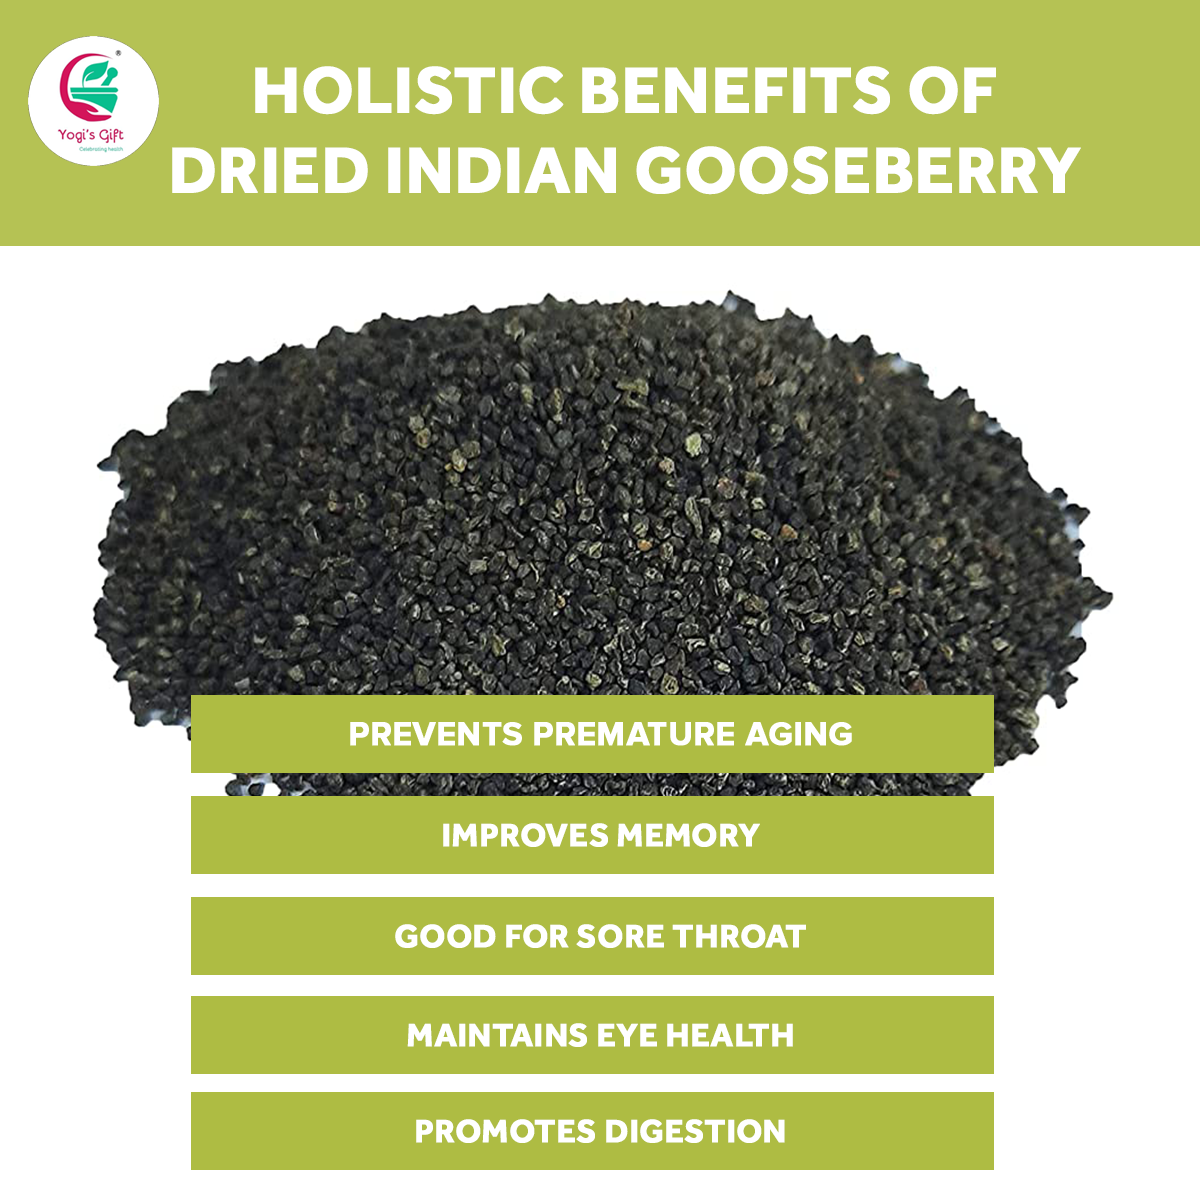 Dried Indian Gooseberry Tea 1 LB | Rich in Vitamin C, Fibre | Dried Amla Berry Tea | Phyllanthus emblica | Te De Amla |  Yogi's Gift®